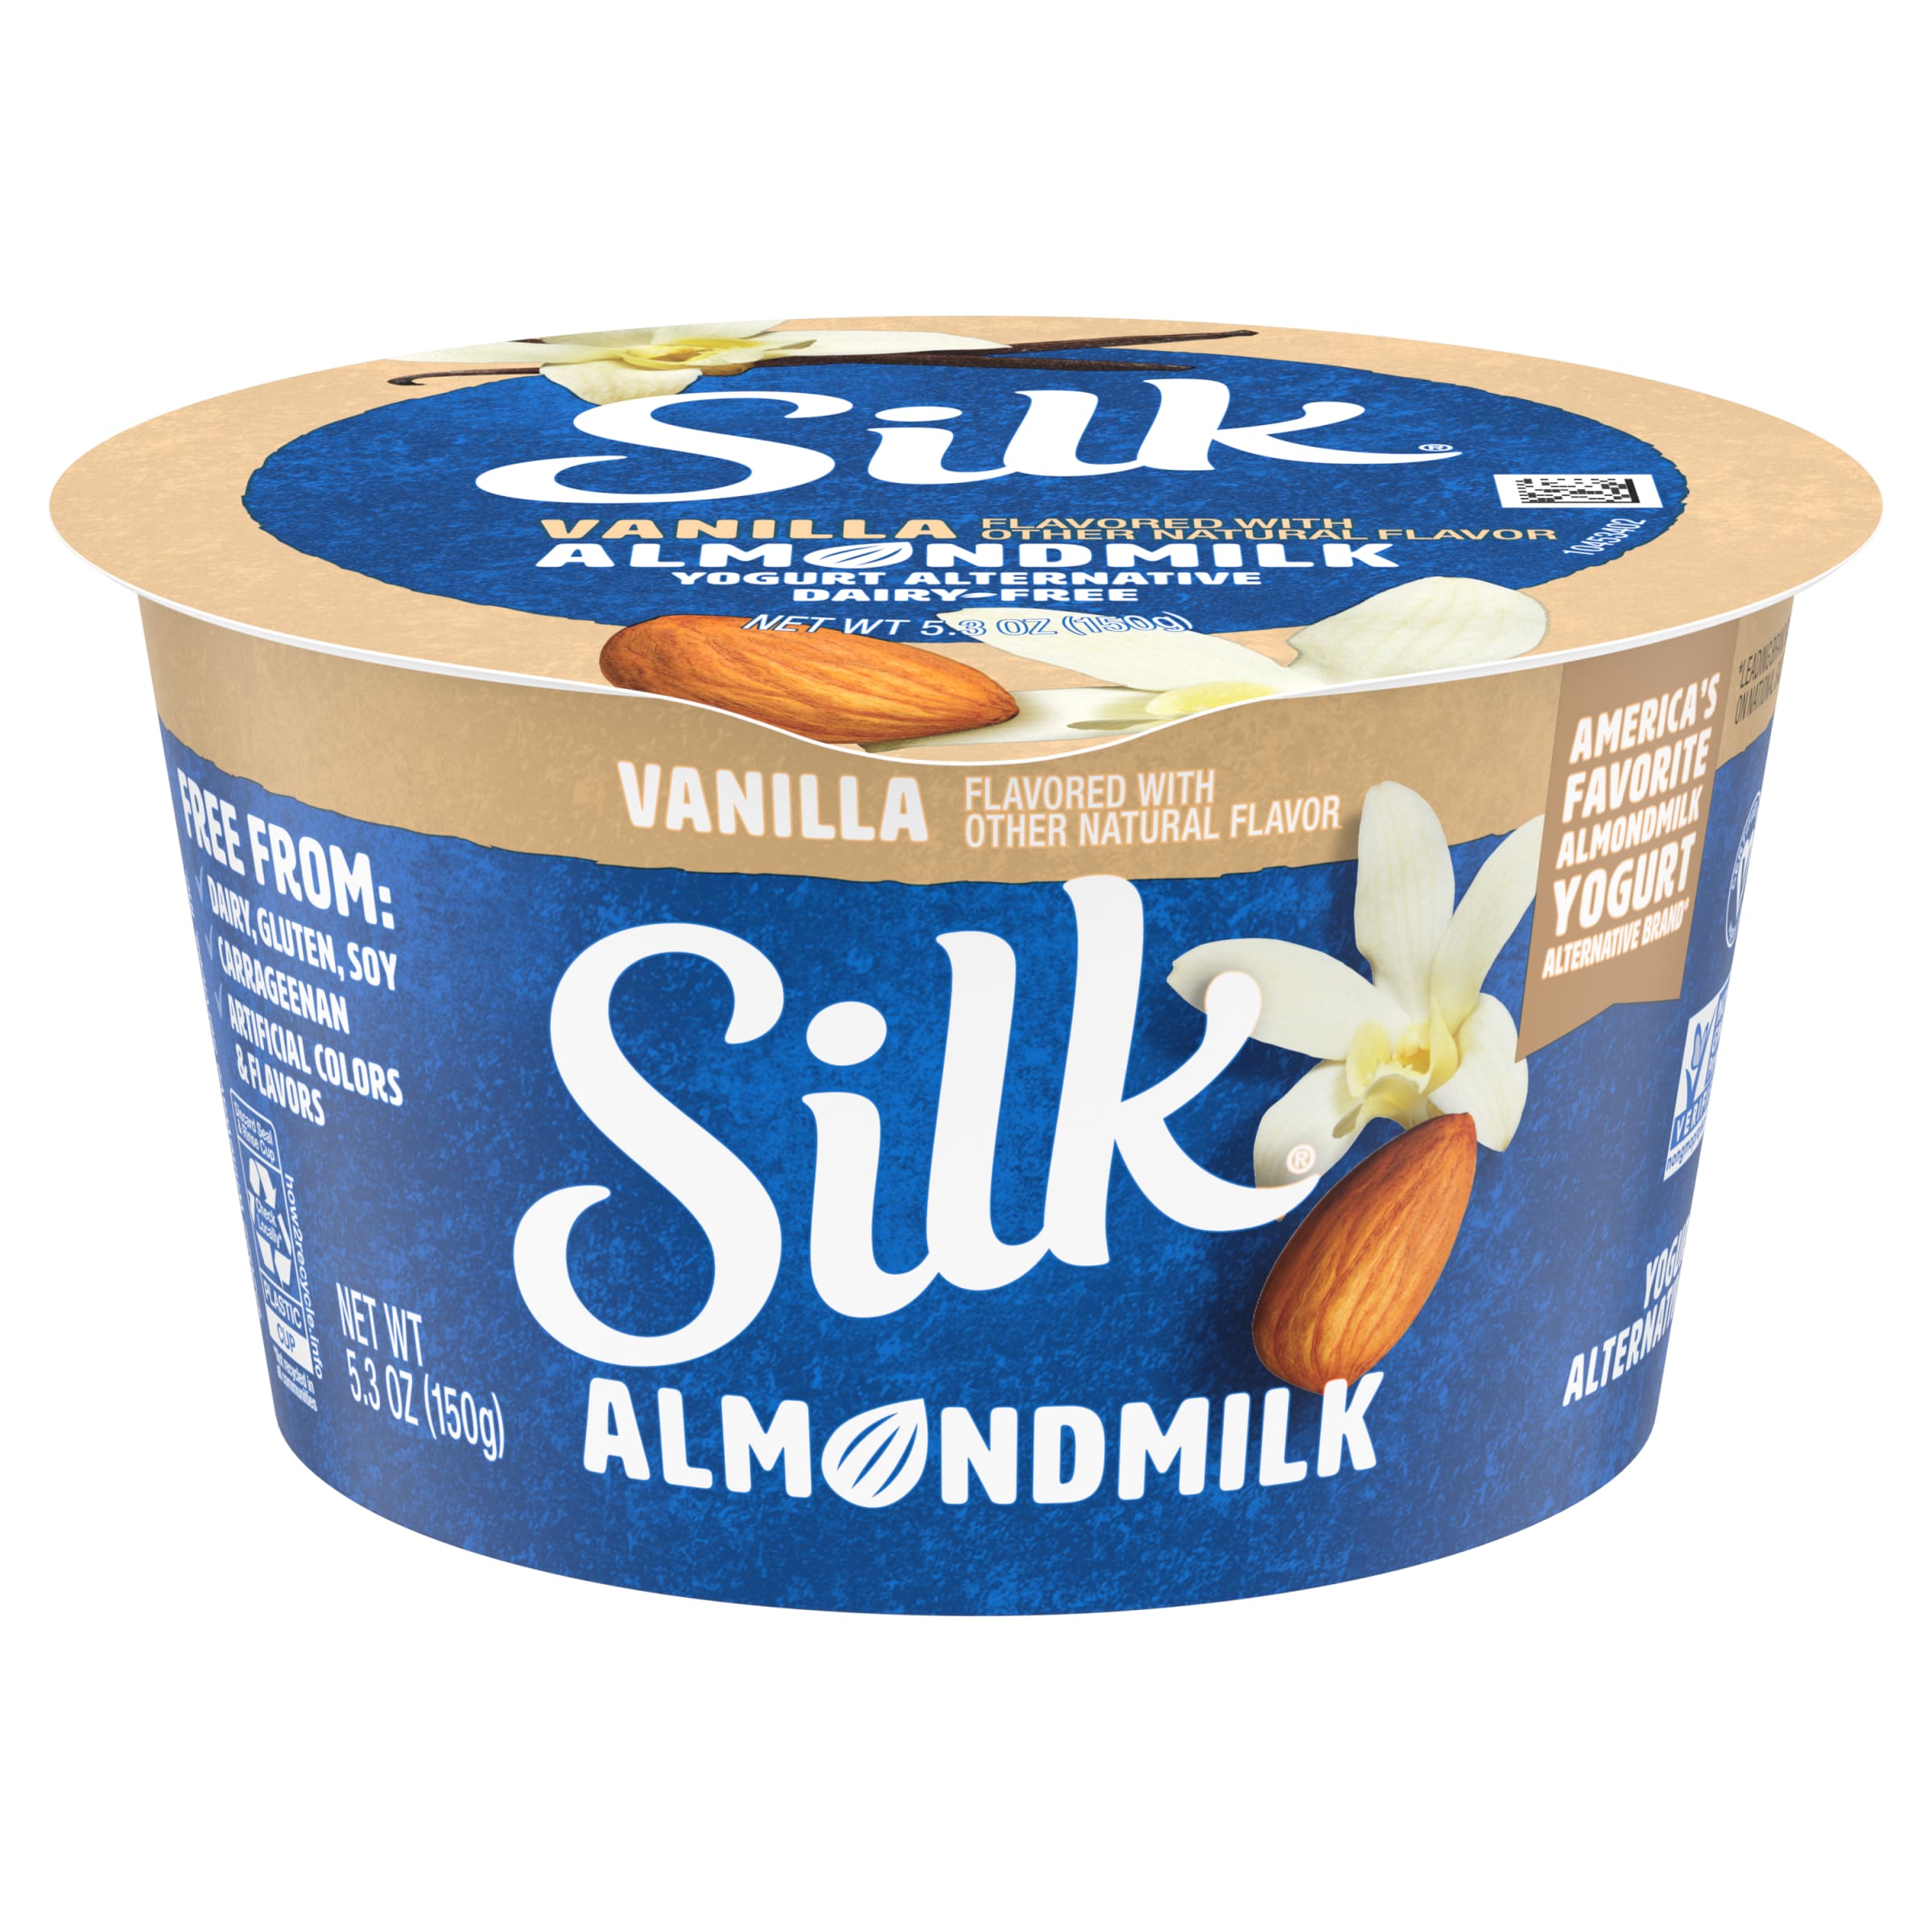 Based,　Free,　5.3　Yogurt　Milk　Container,　Plant　Vanilla　Dairy　Alternative　oz　Silk　Almond